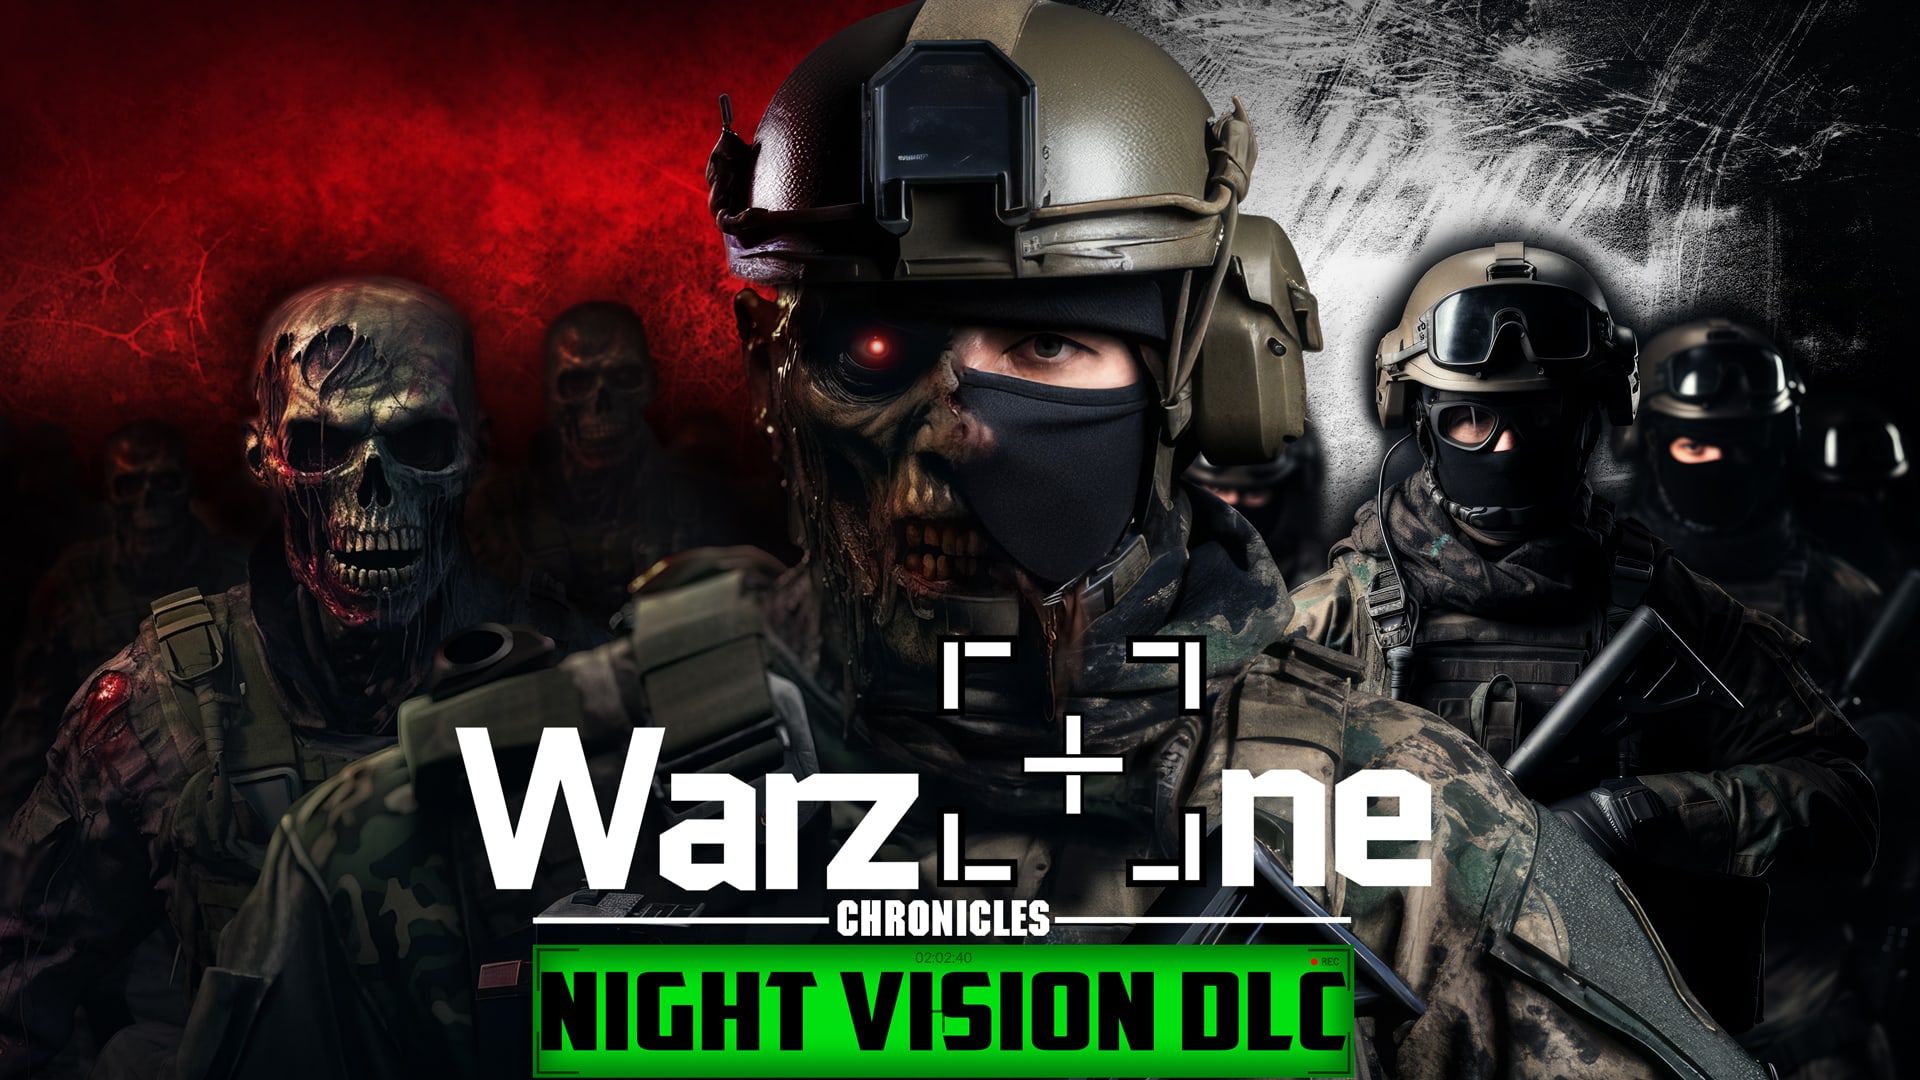 WARZONE CHRONICLES - Night Vision DLC